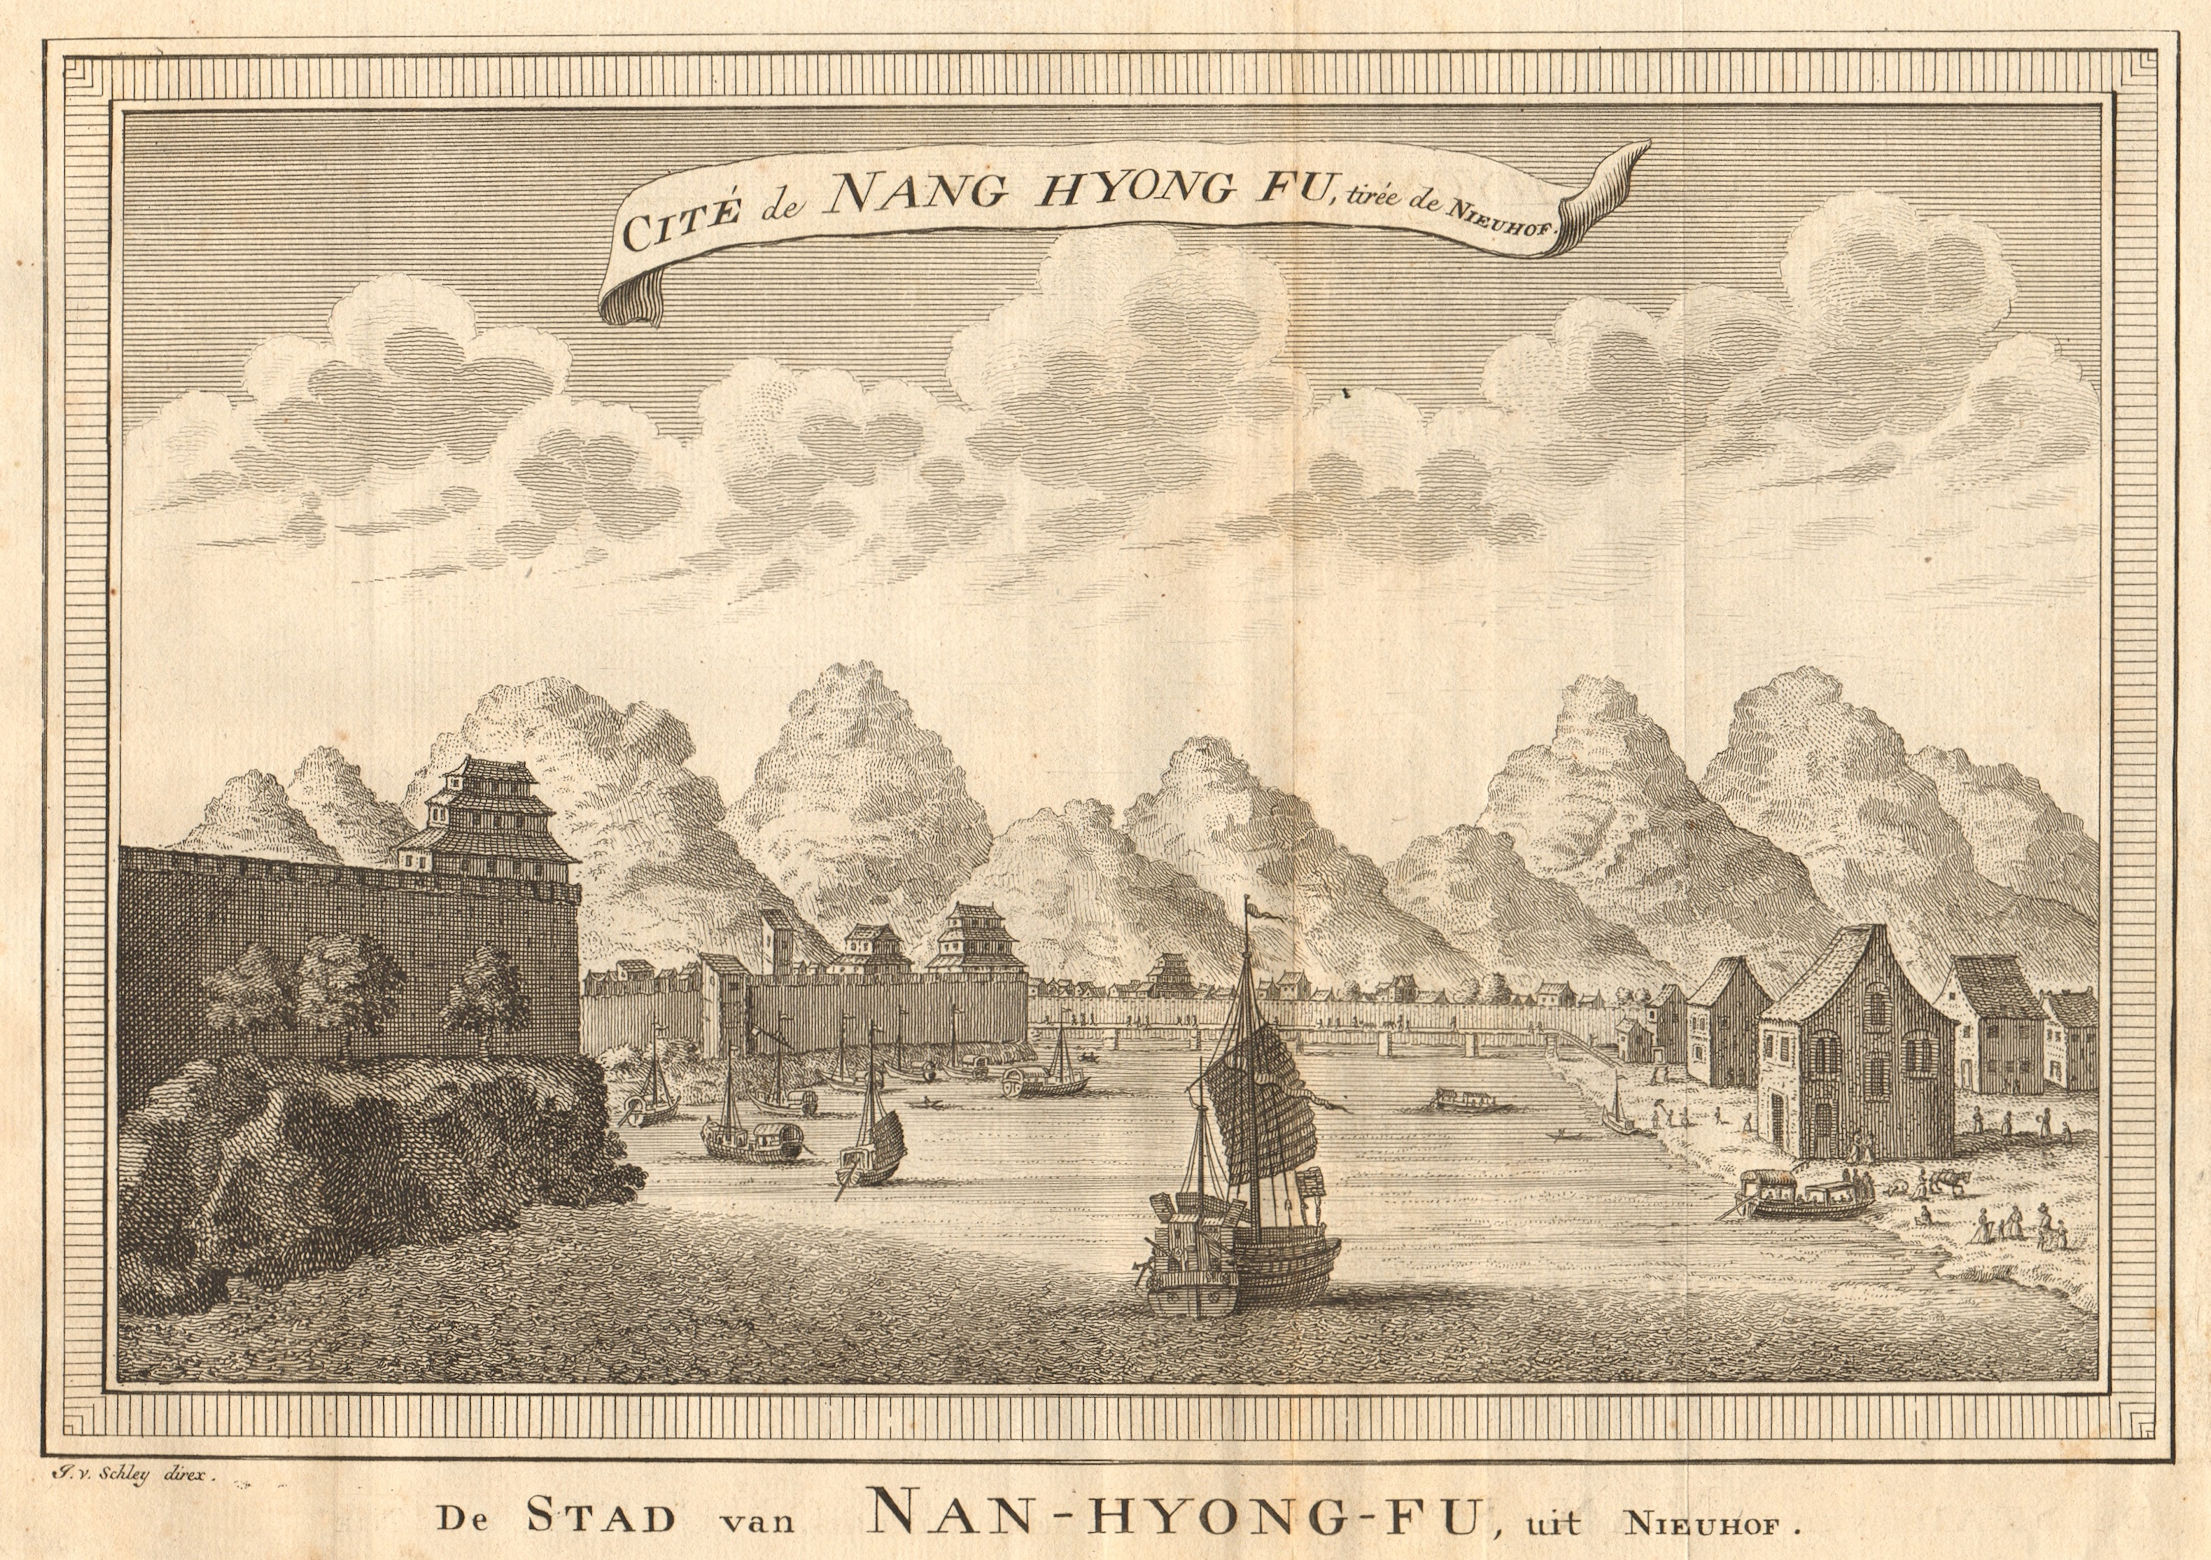 Associate Product 'Cité de Nang Hyong Fu'. City of Nanxiong, China, from Nieuhof. SCHLEY 1749